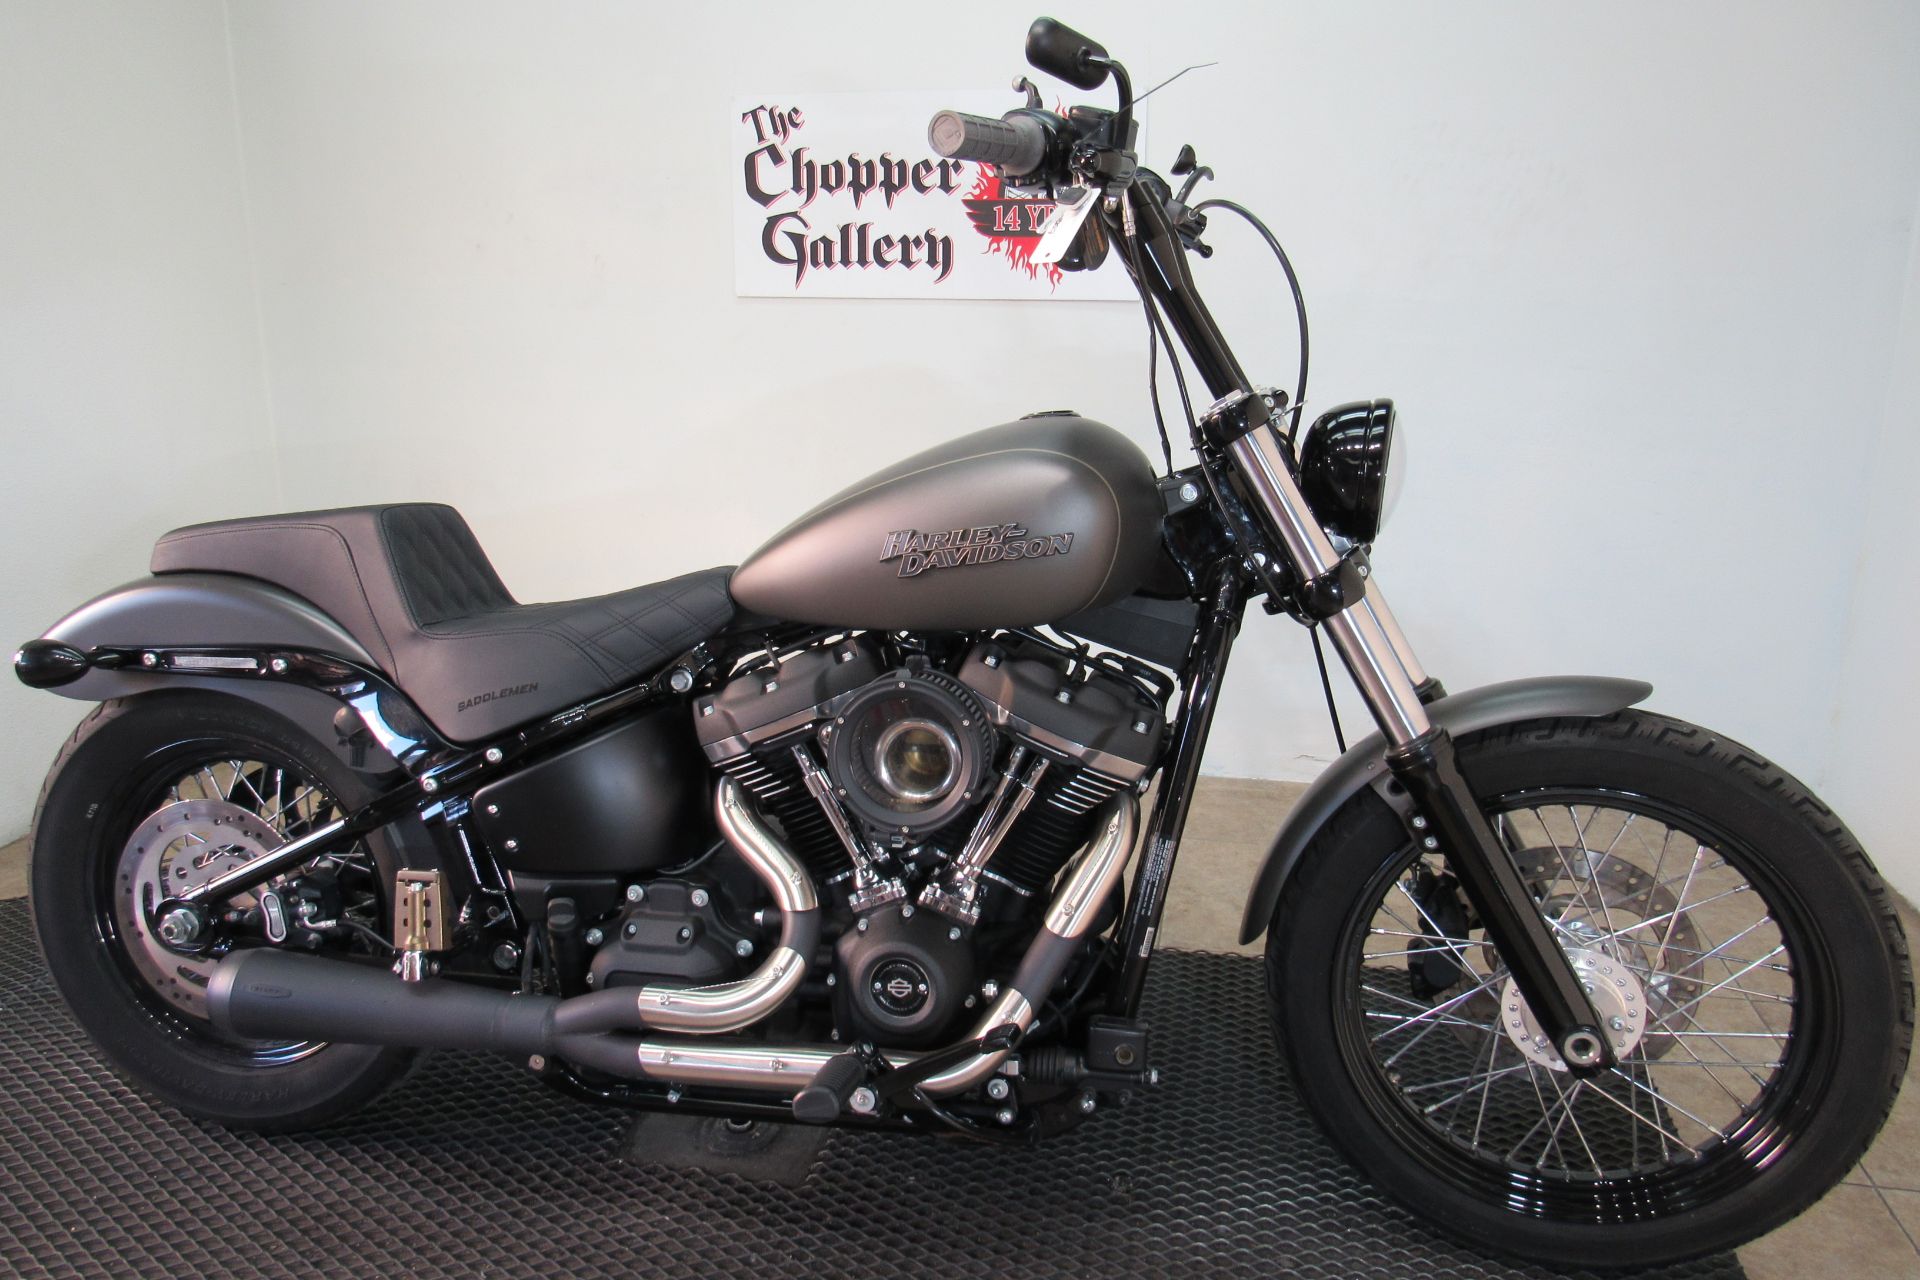 2019 Harley-Davidson Street Bob® in Temecula, California - Photo 3